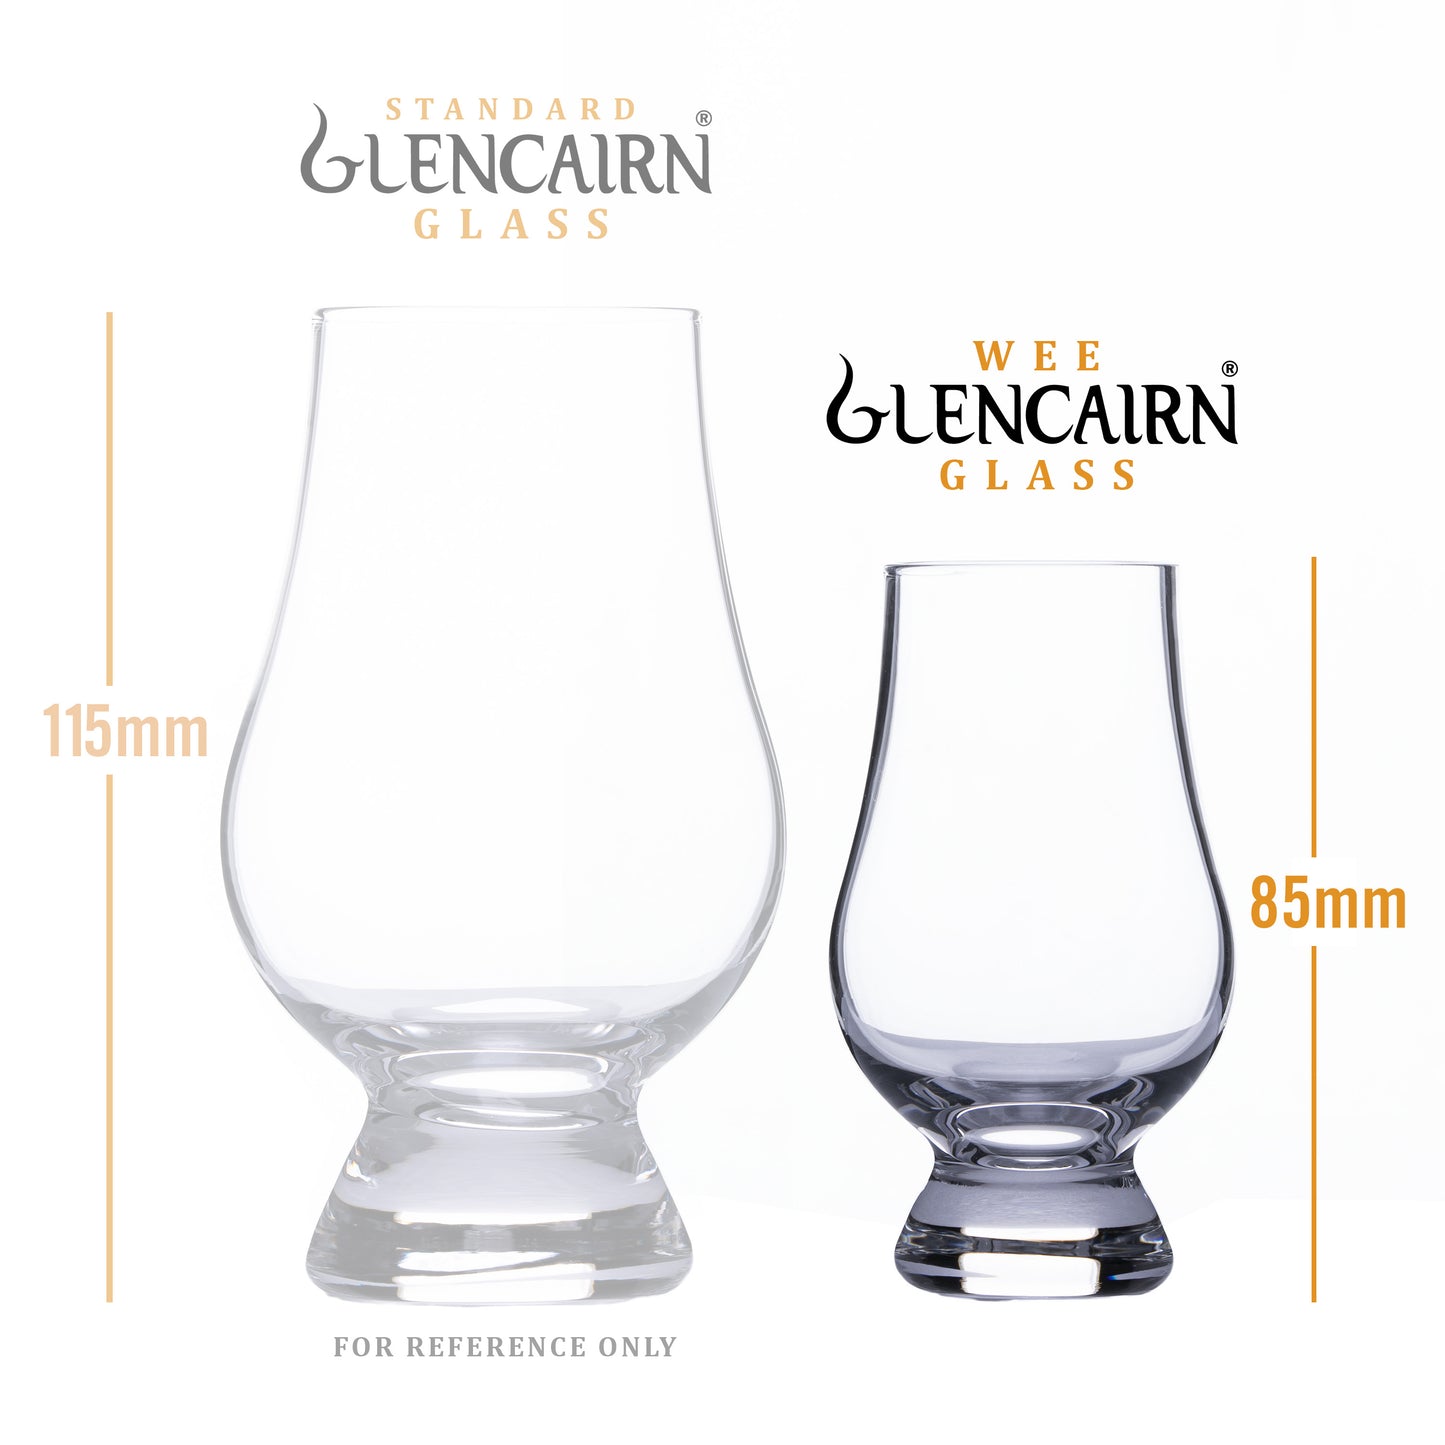 The WEE Glencairn Glass